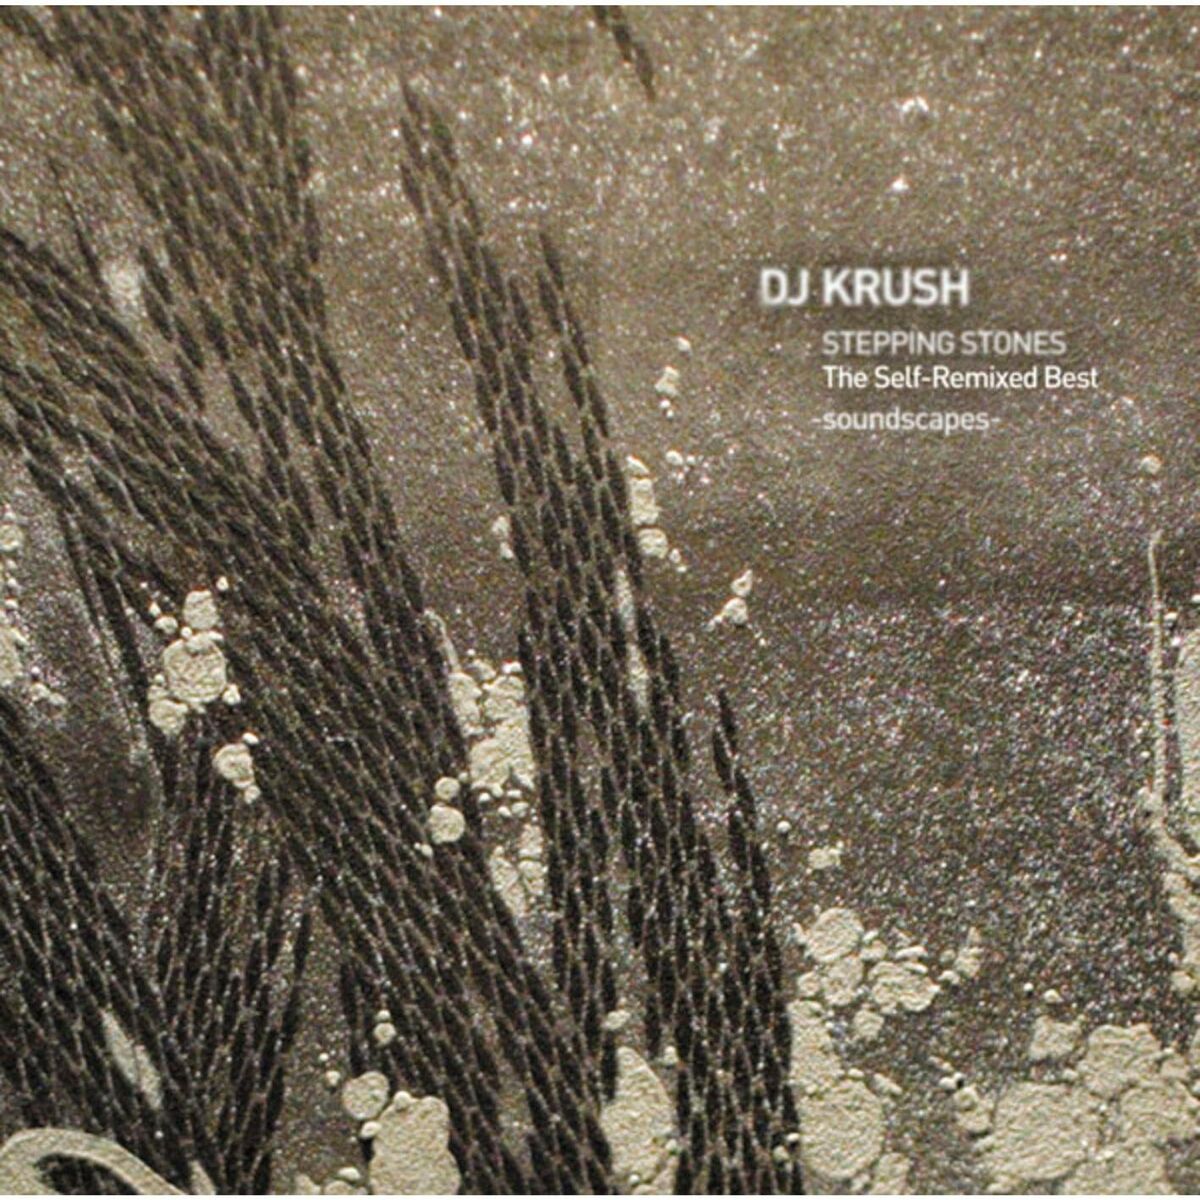 DJ Krush: albums, songs, playlists | Listen on Deezer